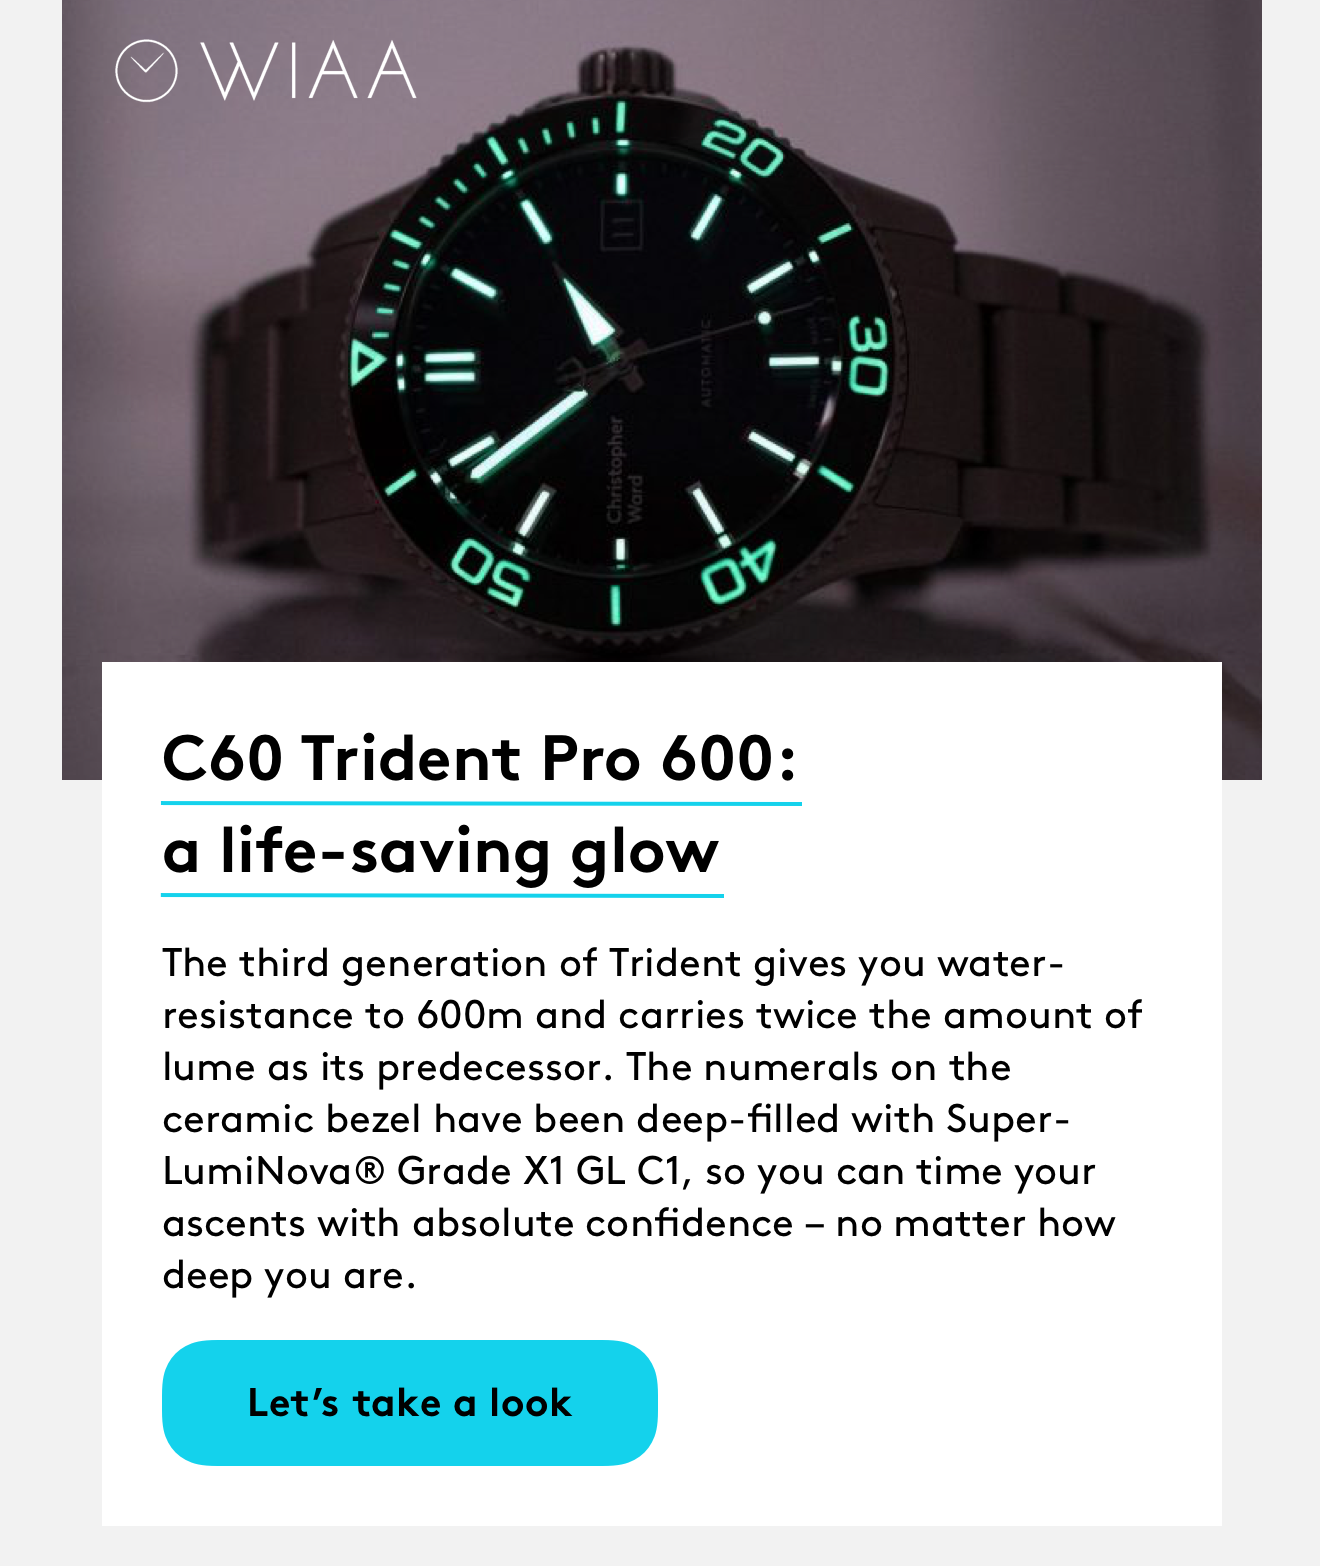 C60 Trident Pro 600: a life-saving glow